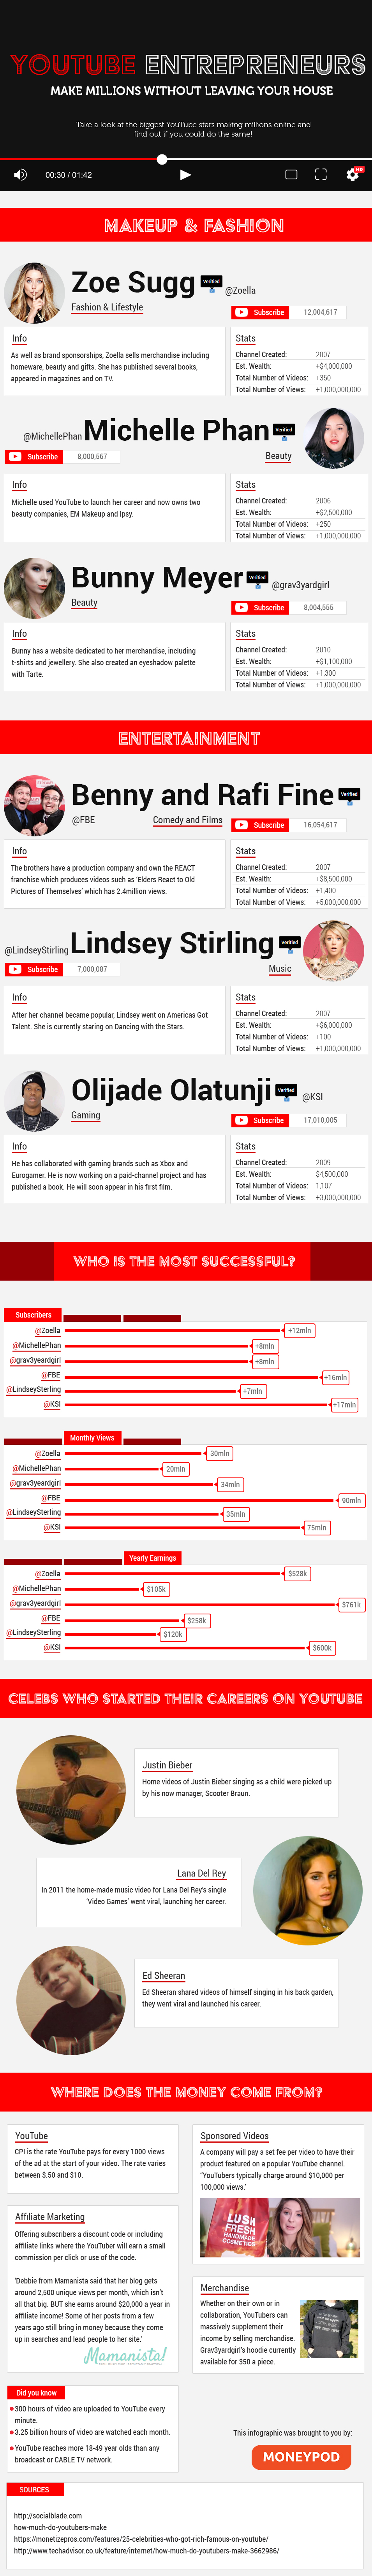 YouTube’s Entrepreneur Success Stories - Infographic